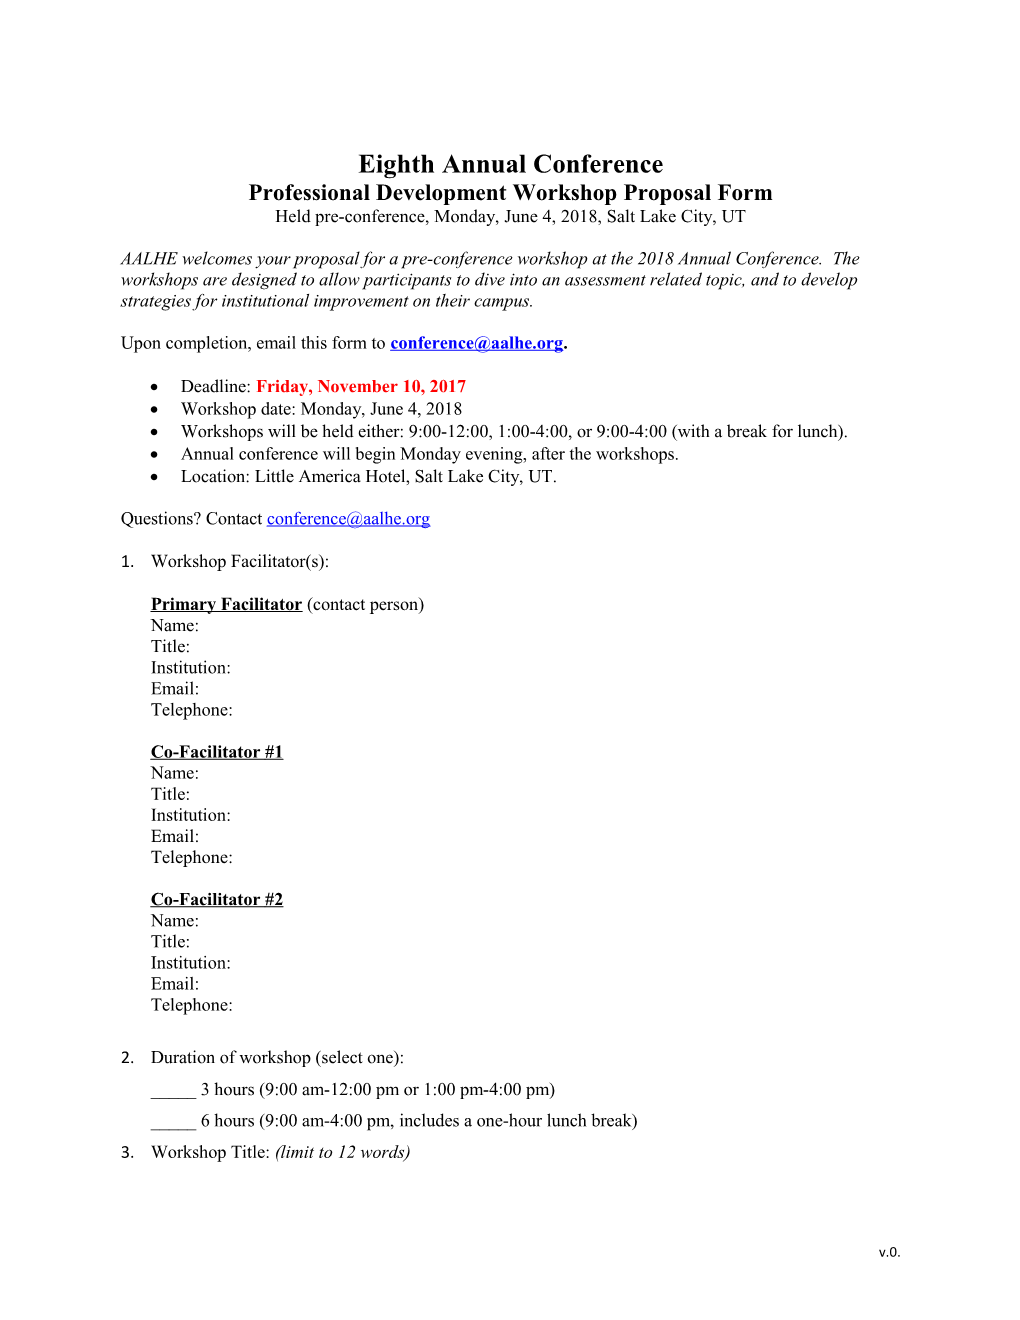 Professional Development Workshop Proposal Form